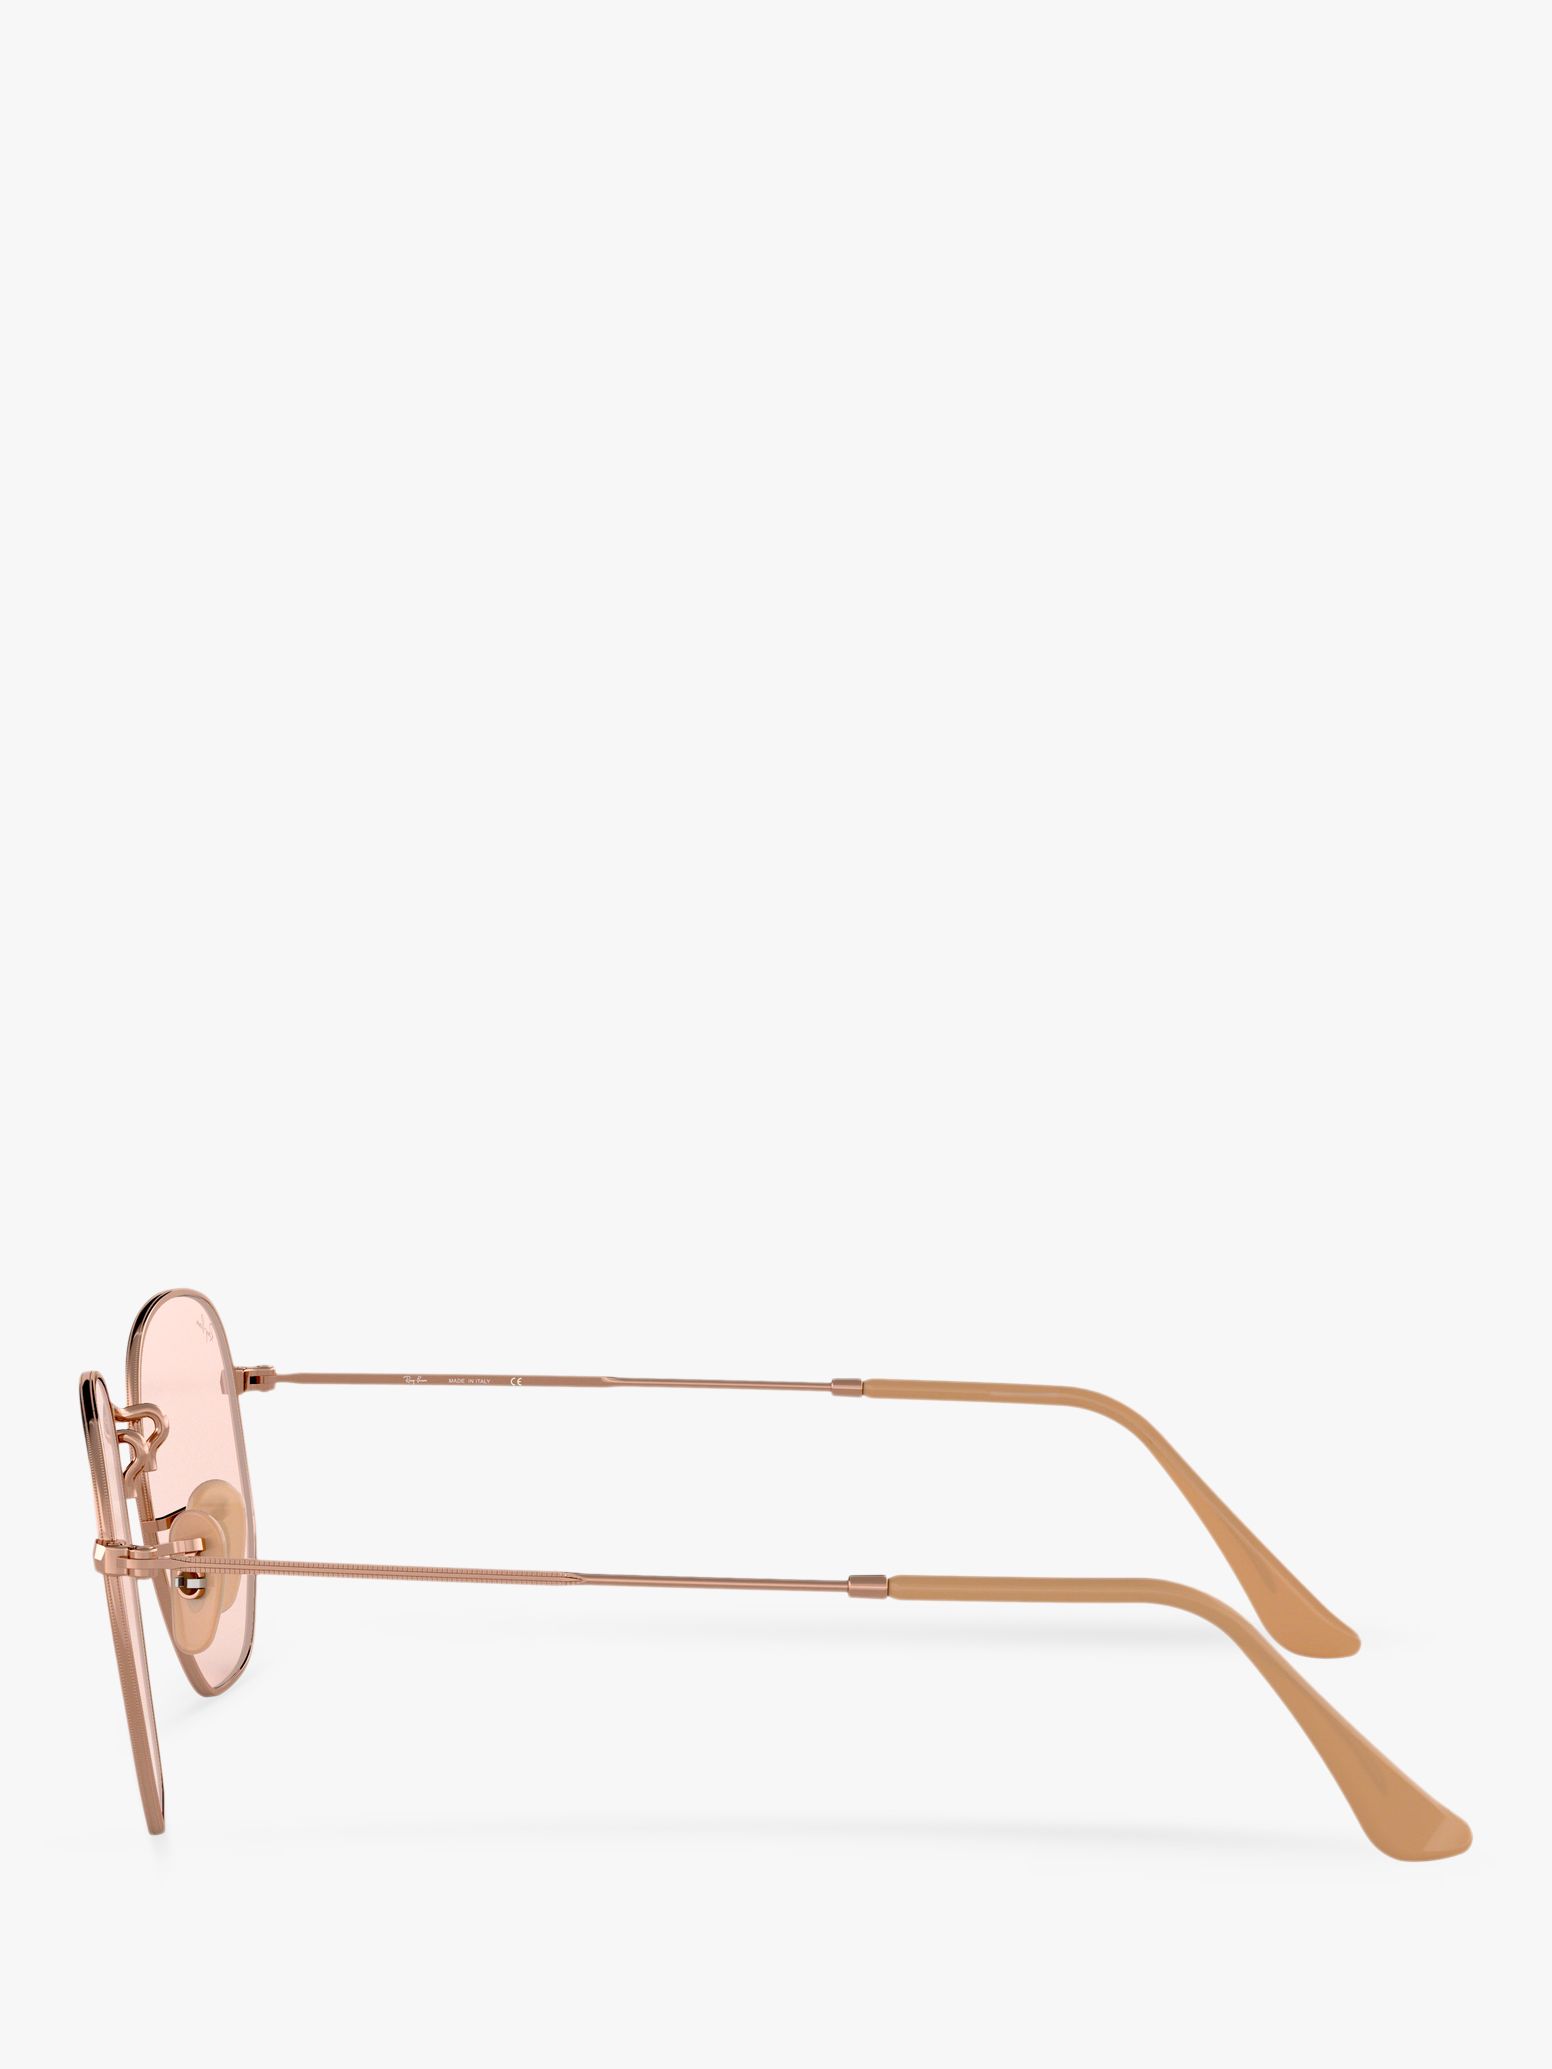 Ray-Ban RB3548N Hexgonal Sunglasses, Copper/Pink